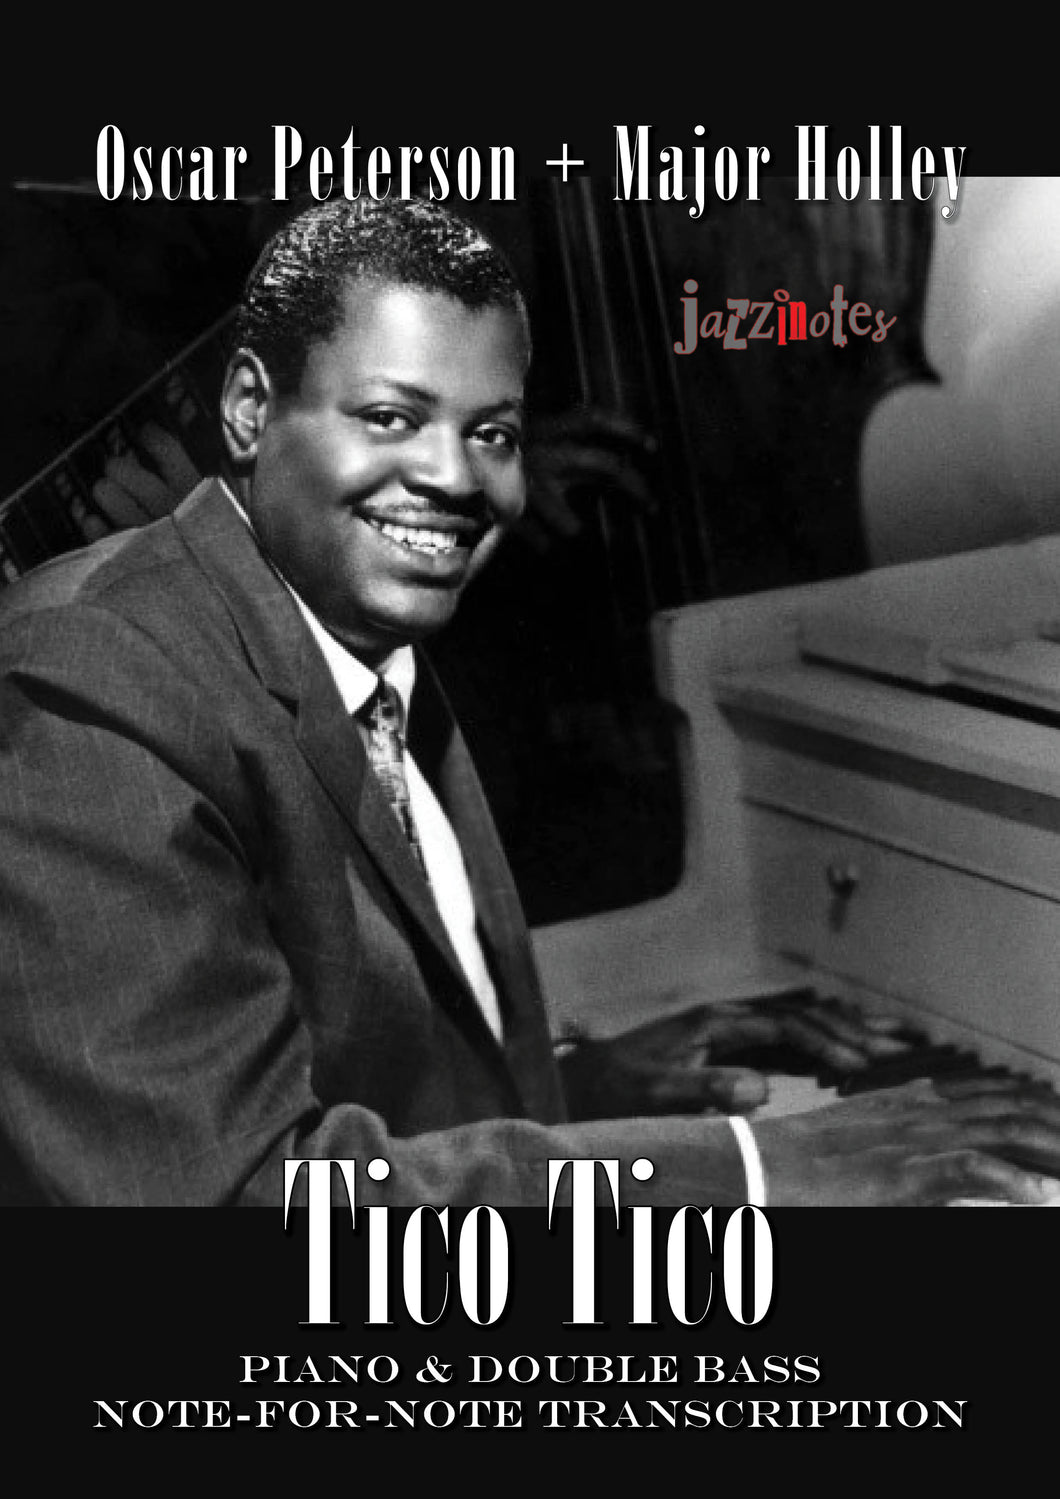 Peterson, Oscar: Tico Tico - Sheet Music Download